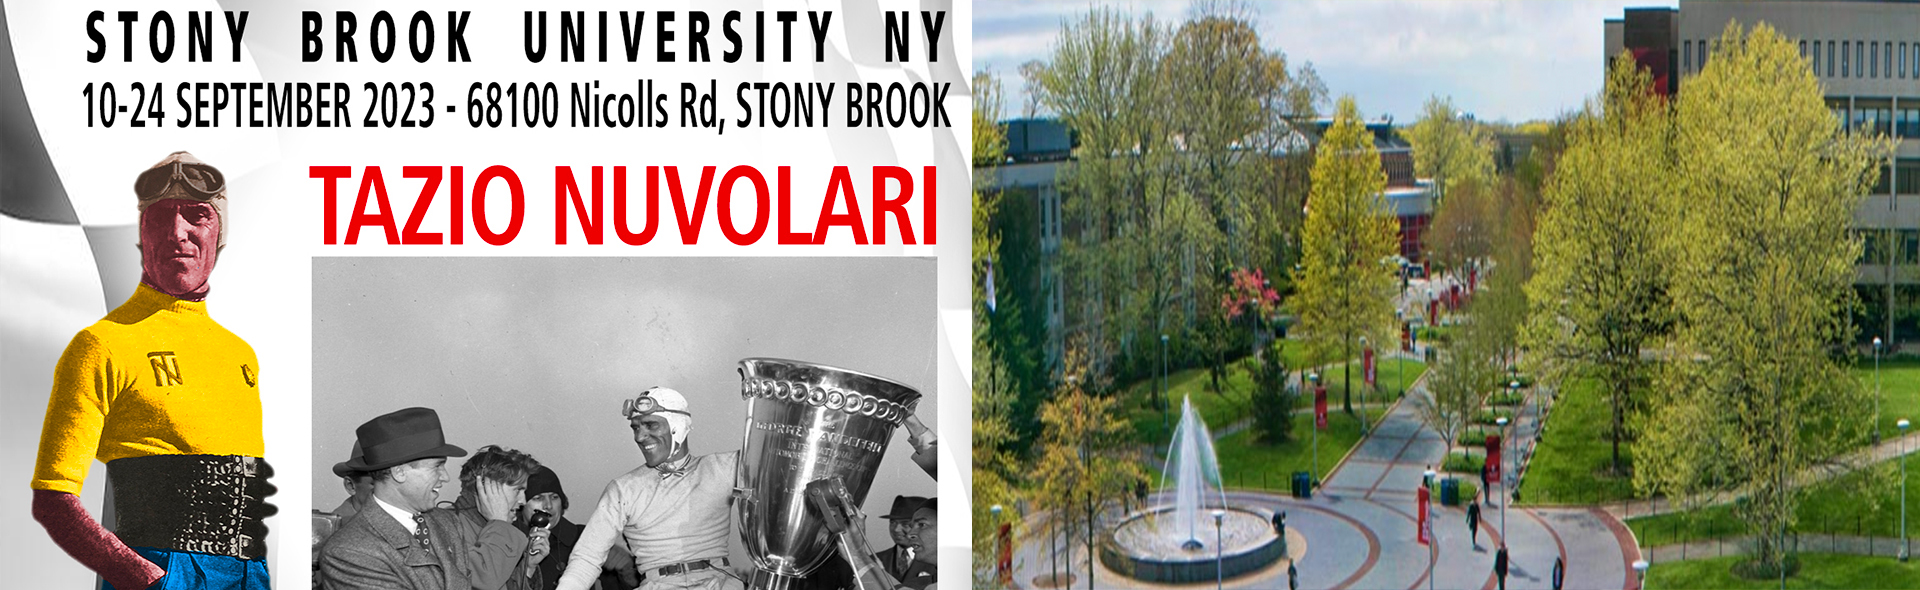 Stony Brook University New York - VANDERBILT CUP